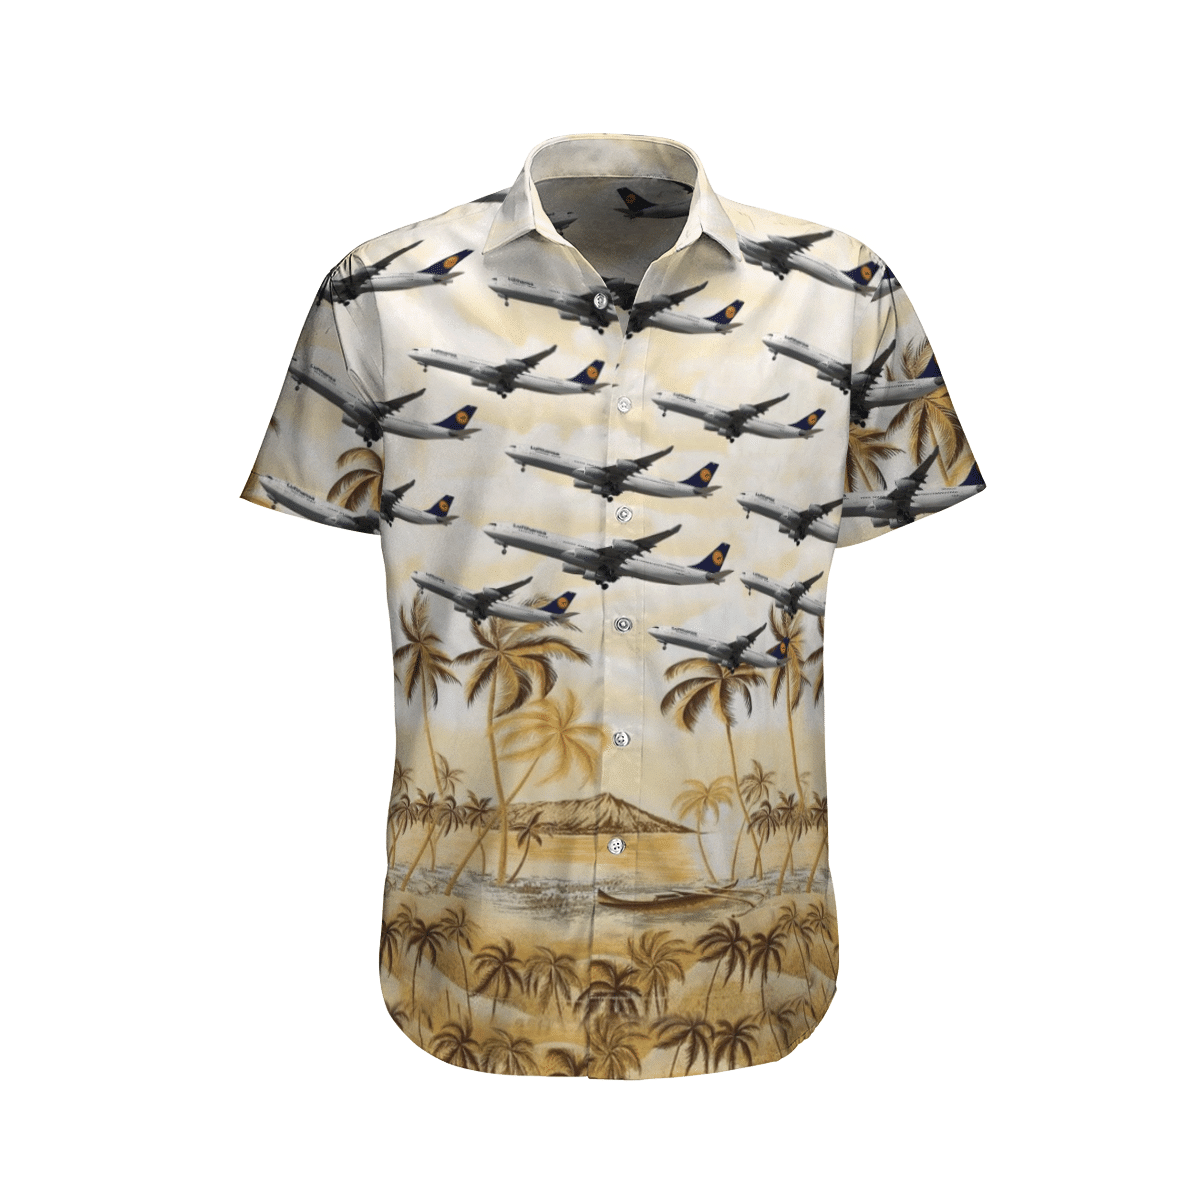 Get a new Hawaiian shirt to enjoy summer vacation 152